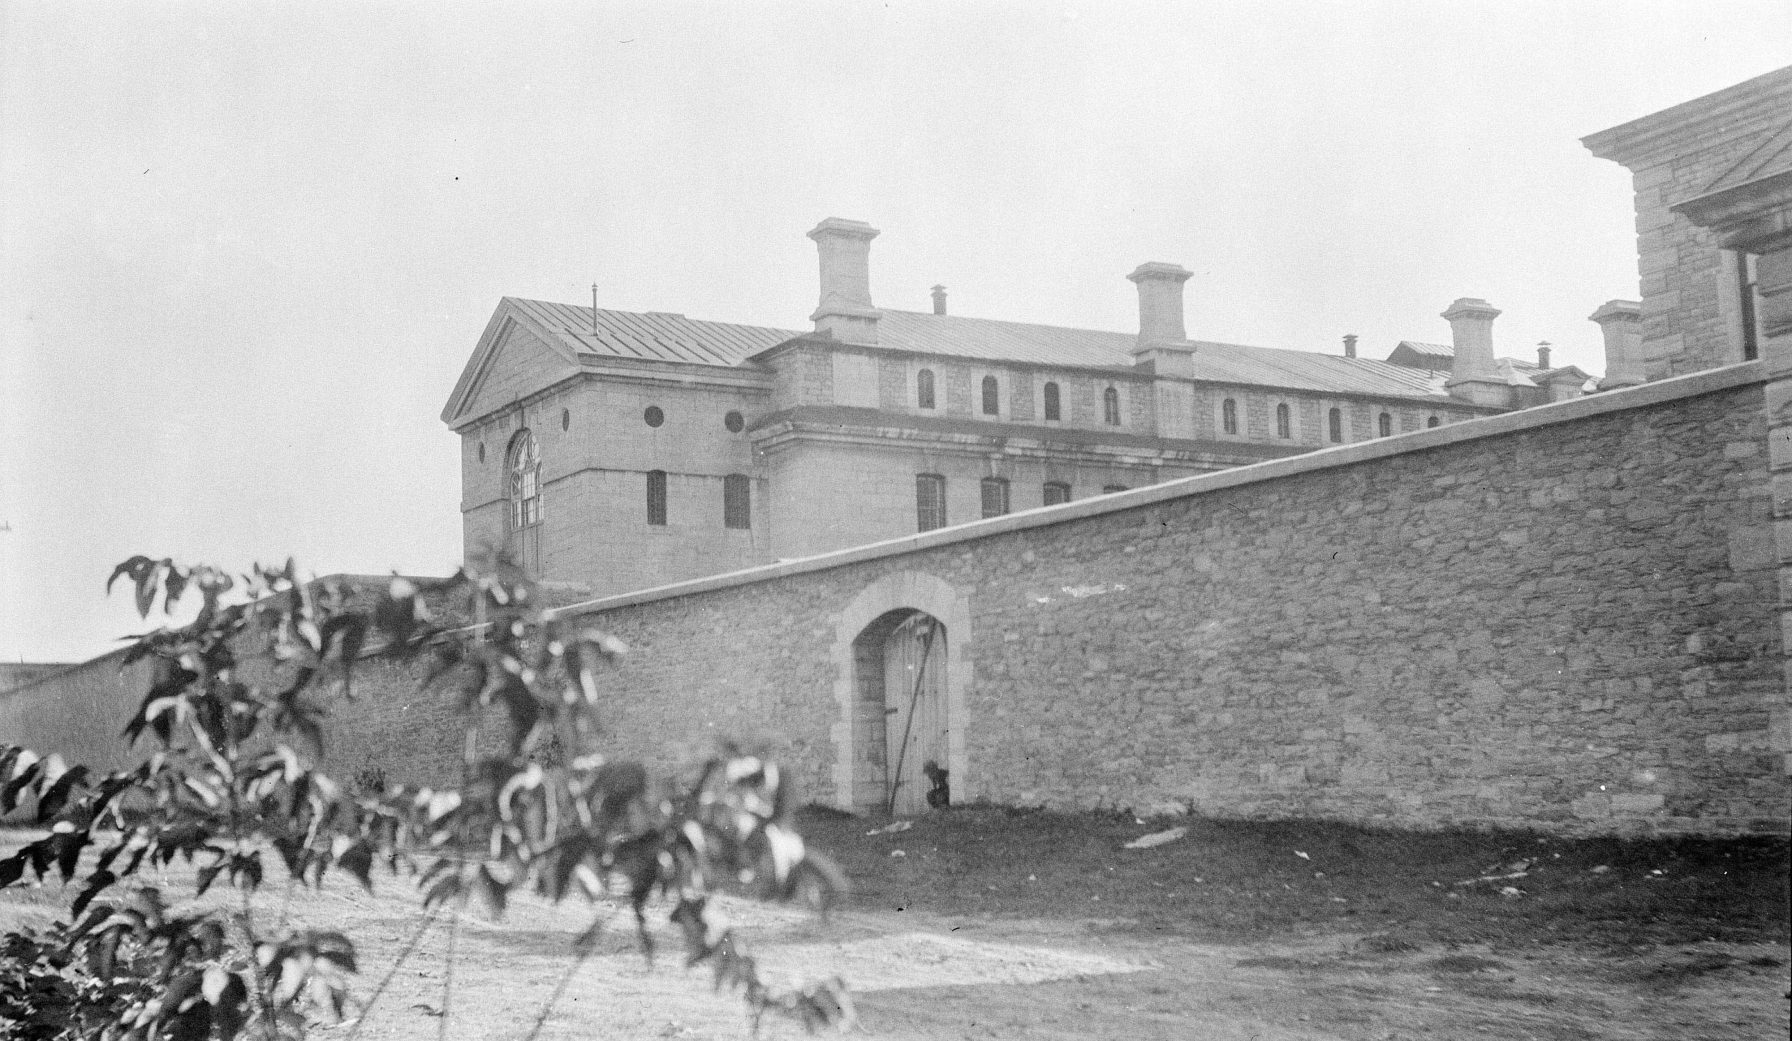 Vintage photo of the exterior façade of the Ottawa jail